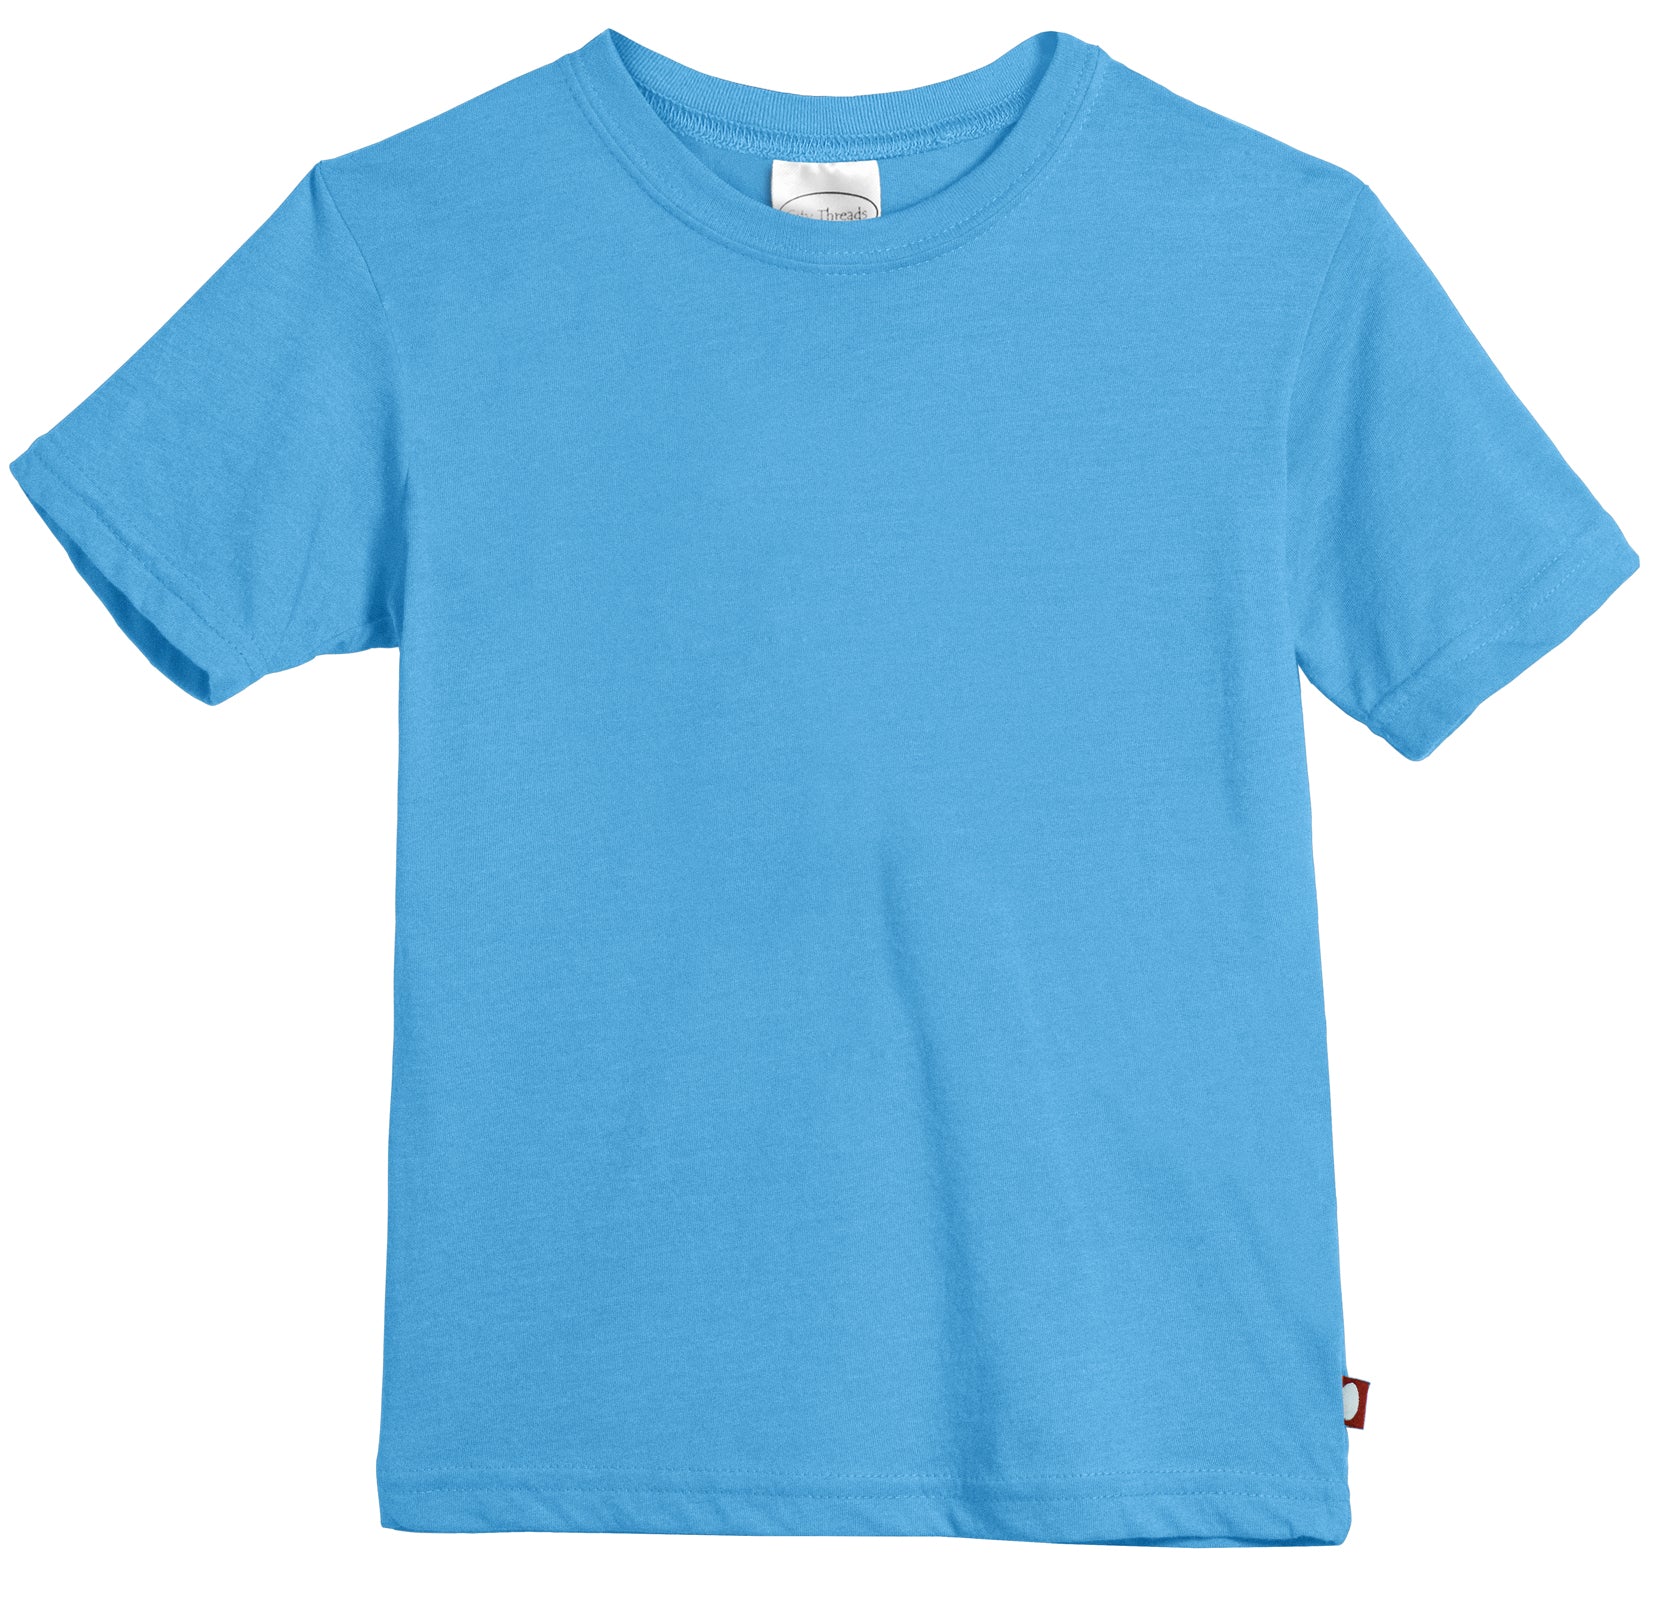 JUSCUBS Boys Grey Printed Cotton Blend Crew Neck Tshirt (6-9M)